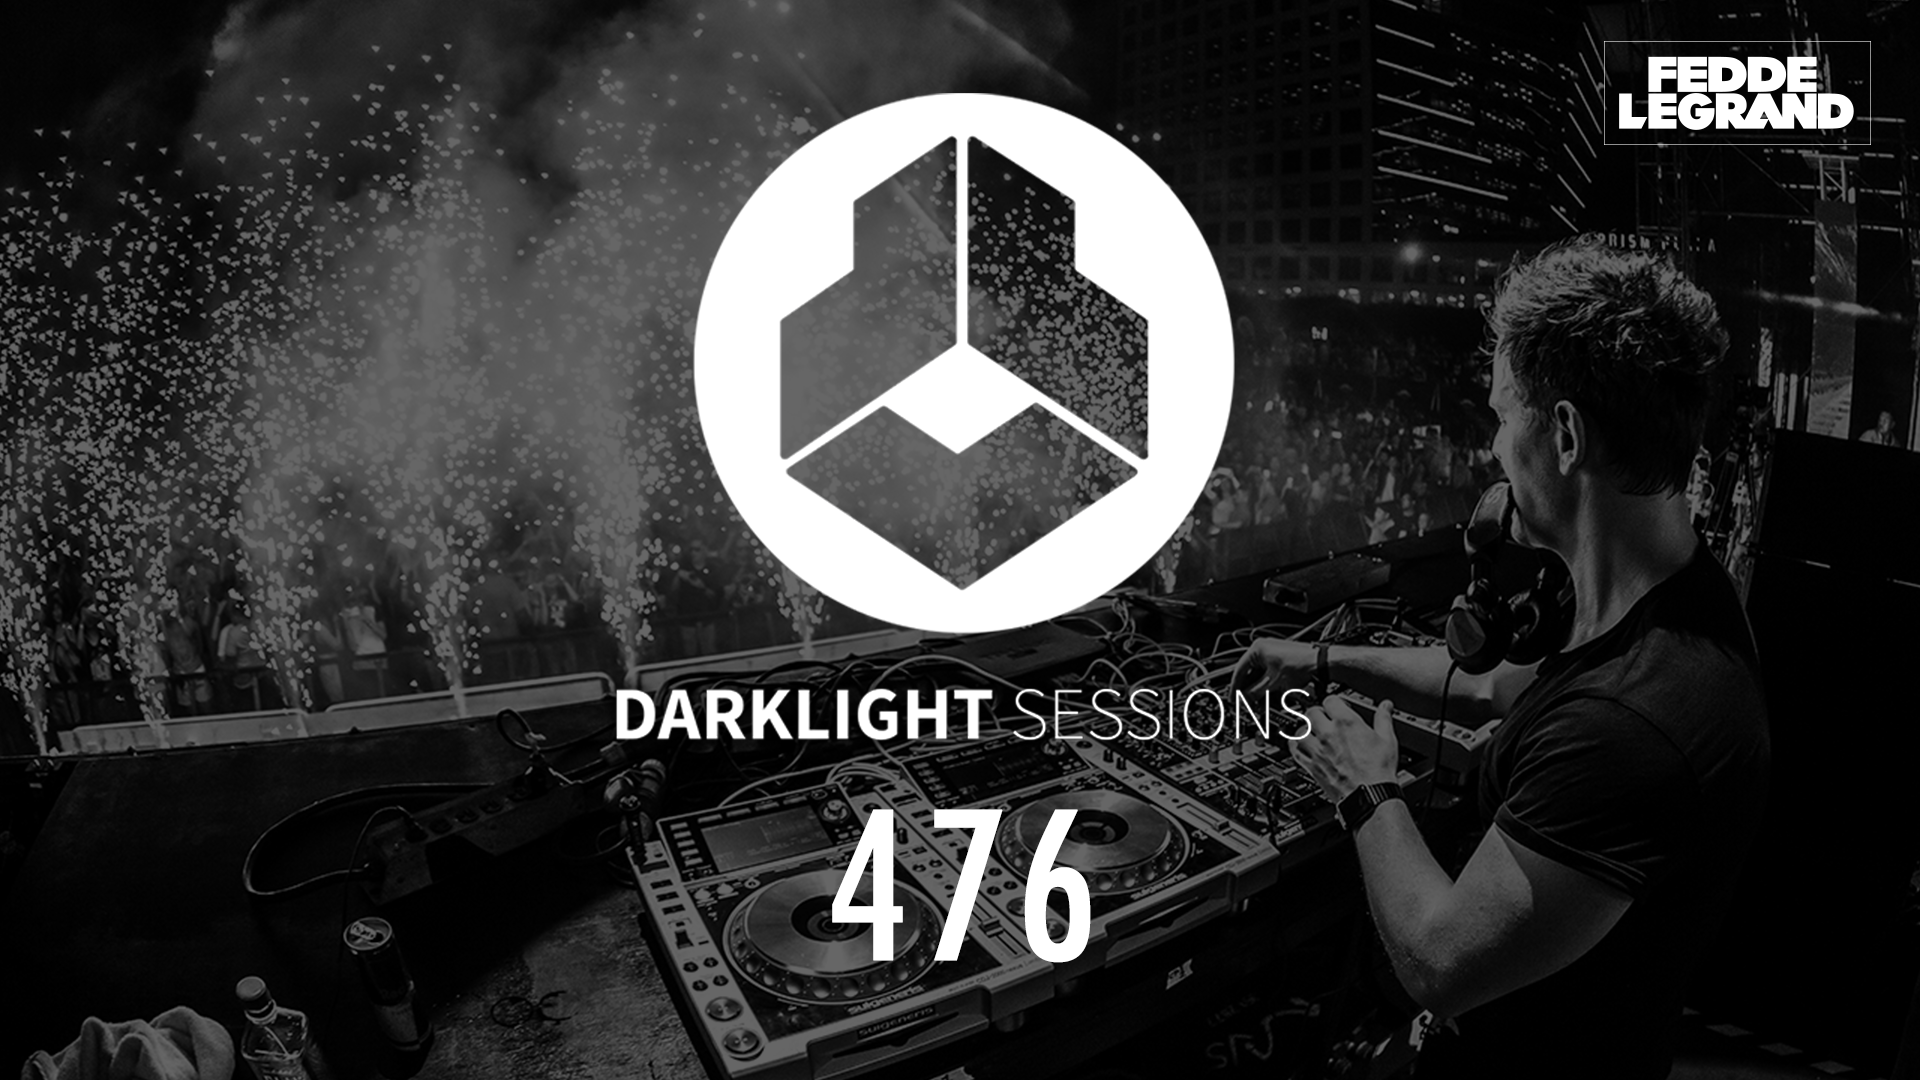 Darklight Sessions 476